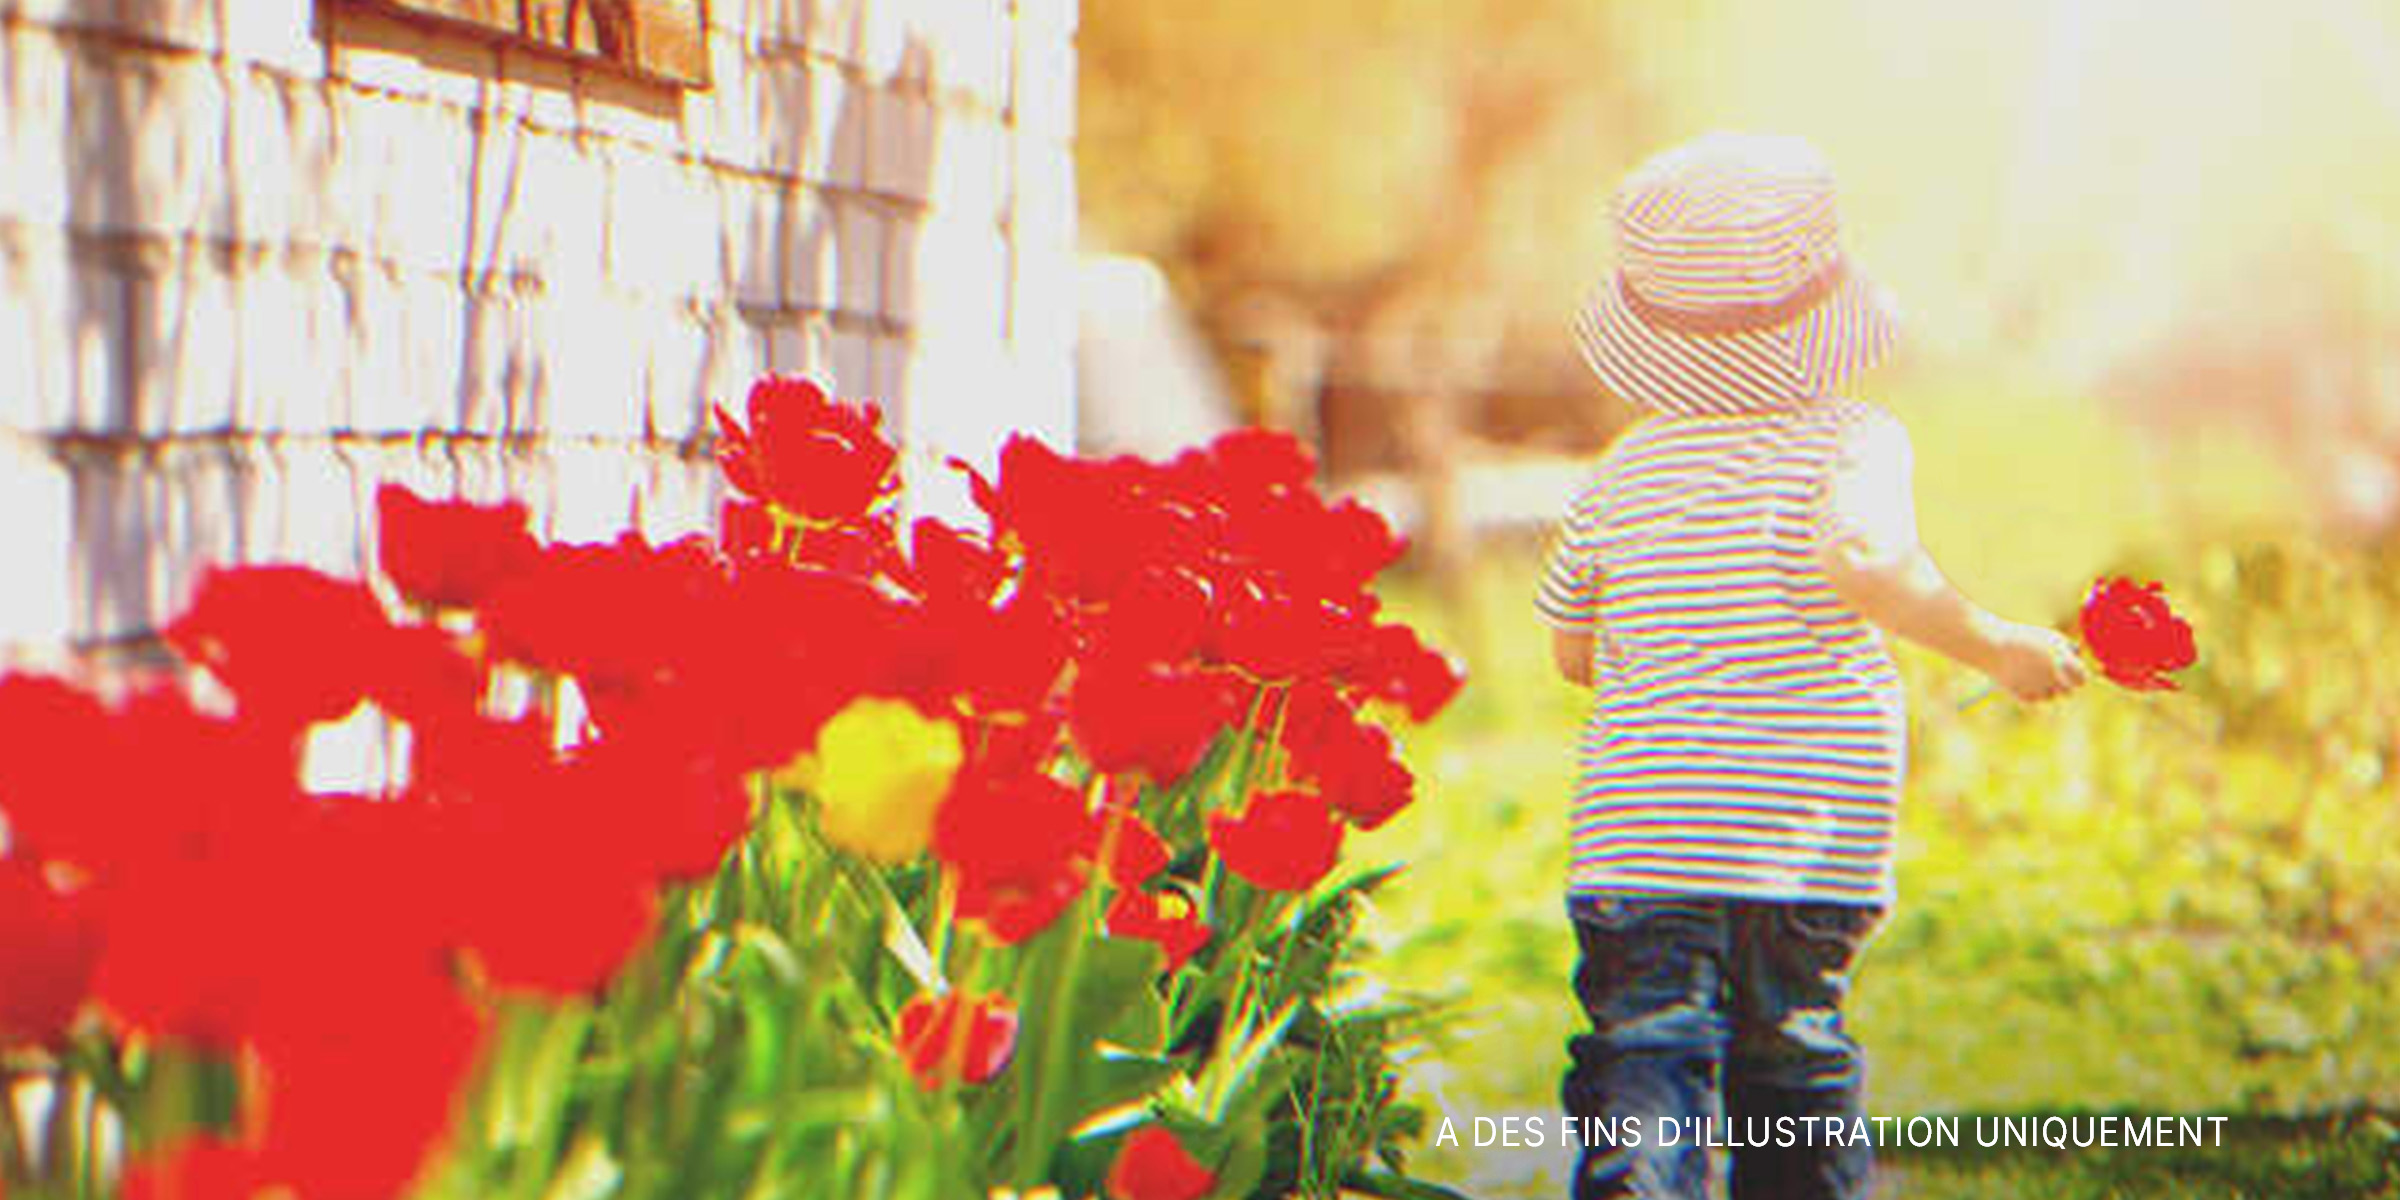 Un petit garçon qui court dans un jardin | Source : Shutterstock